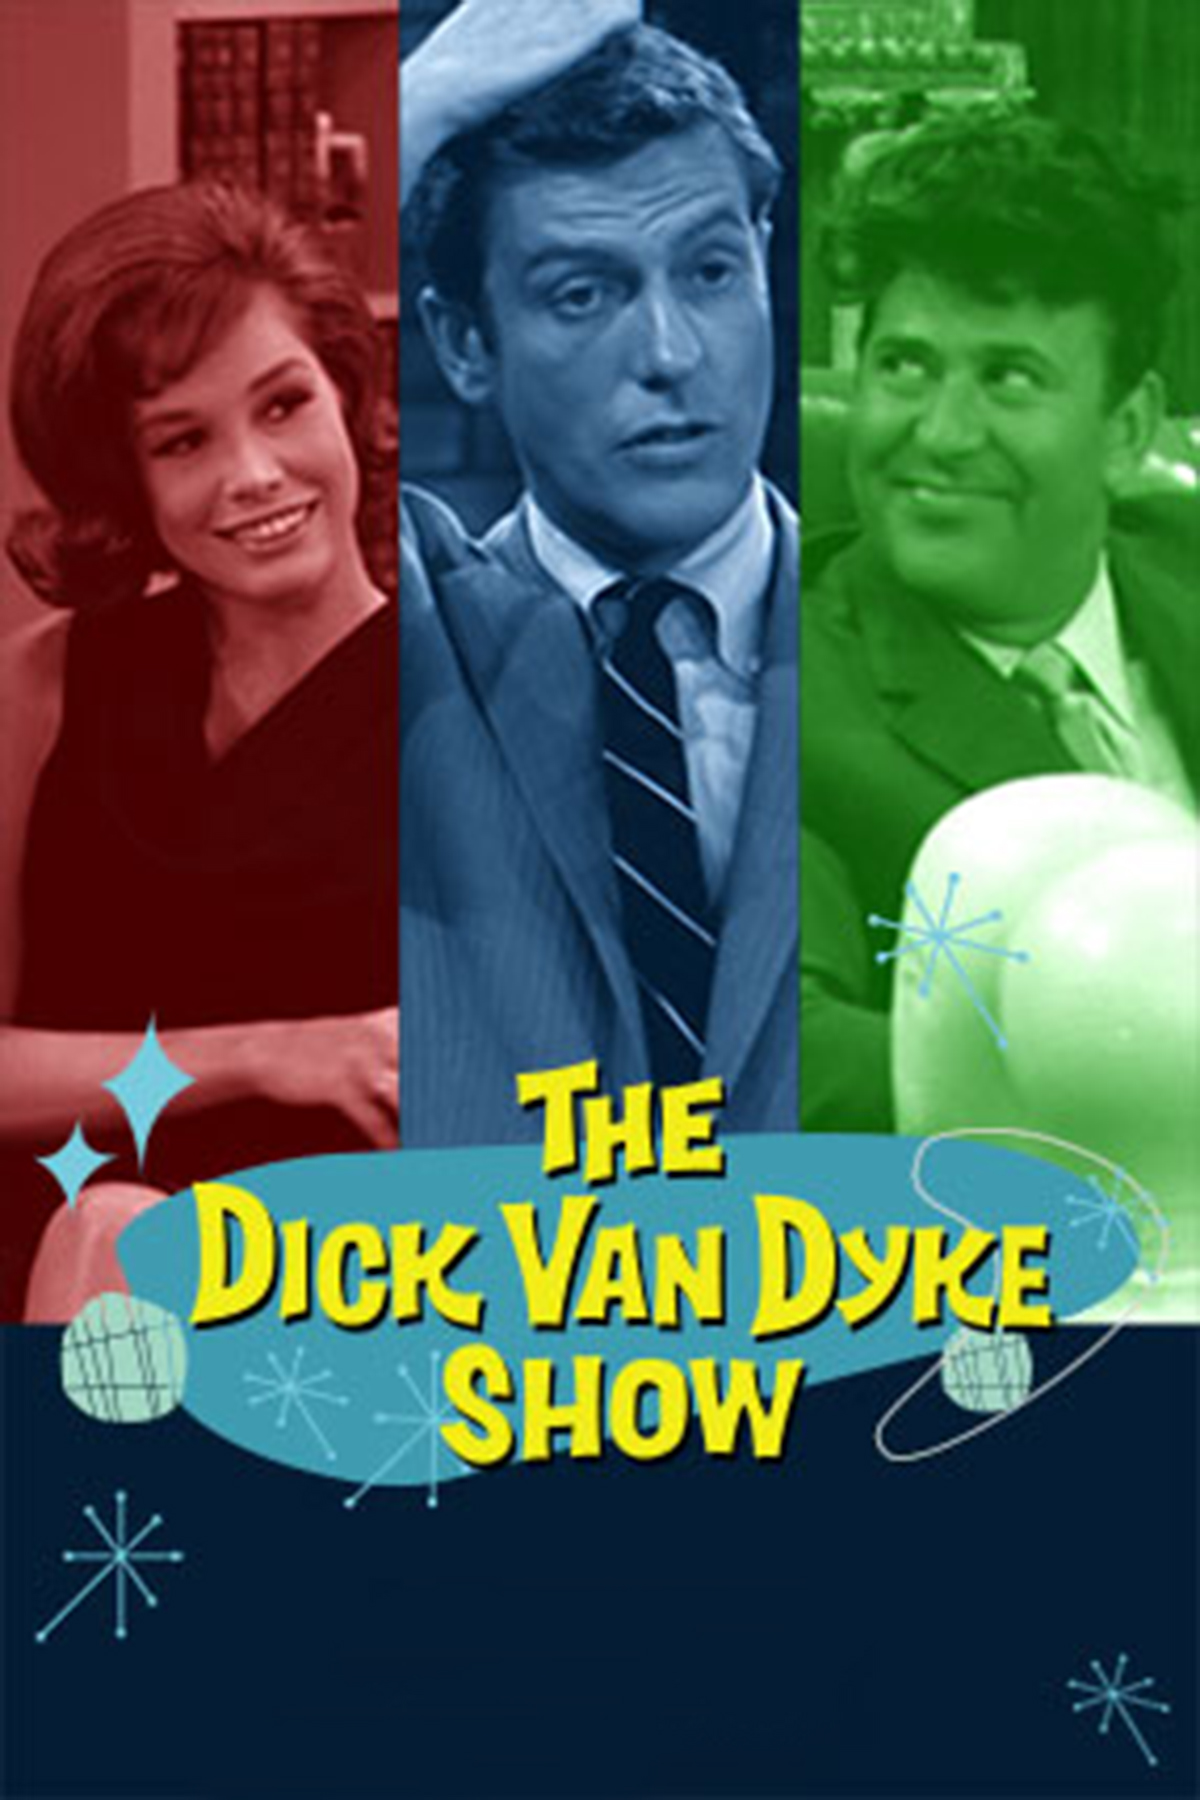 Dick van dyke show scream like a chicken